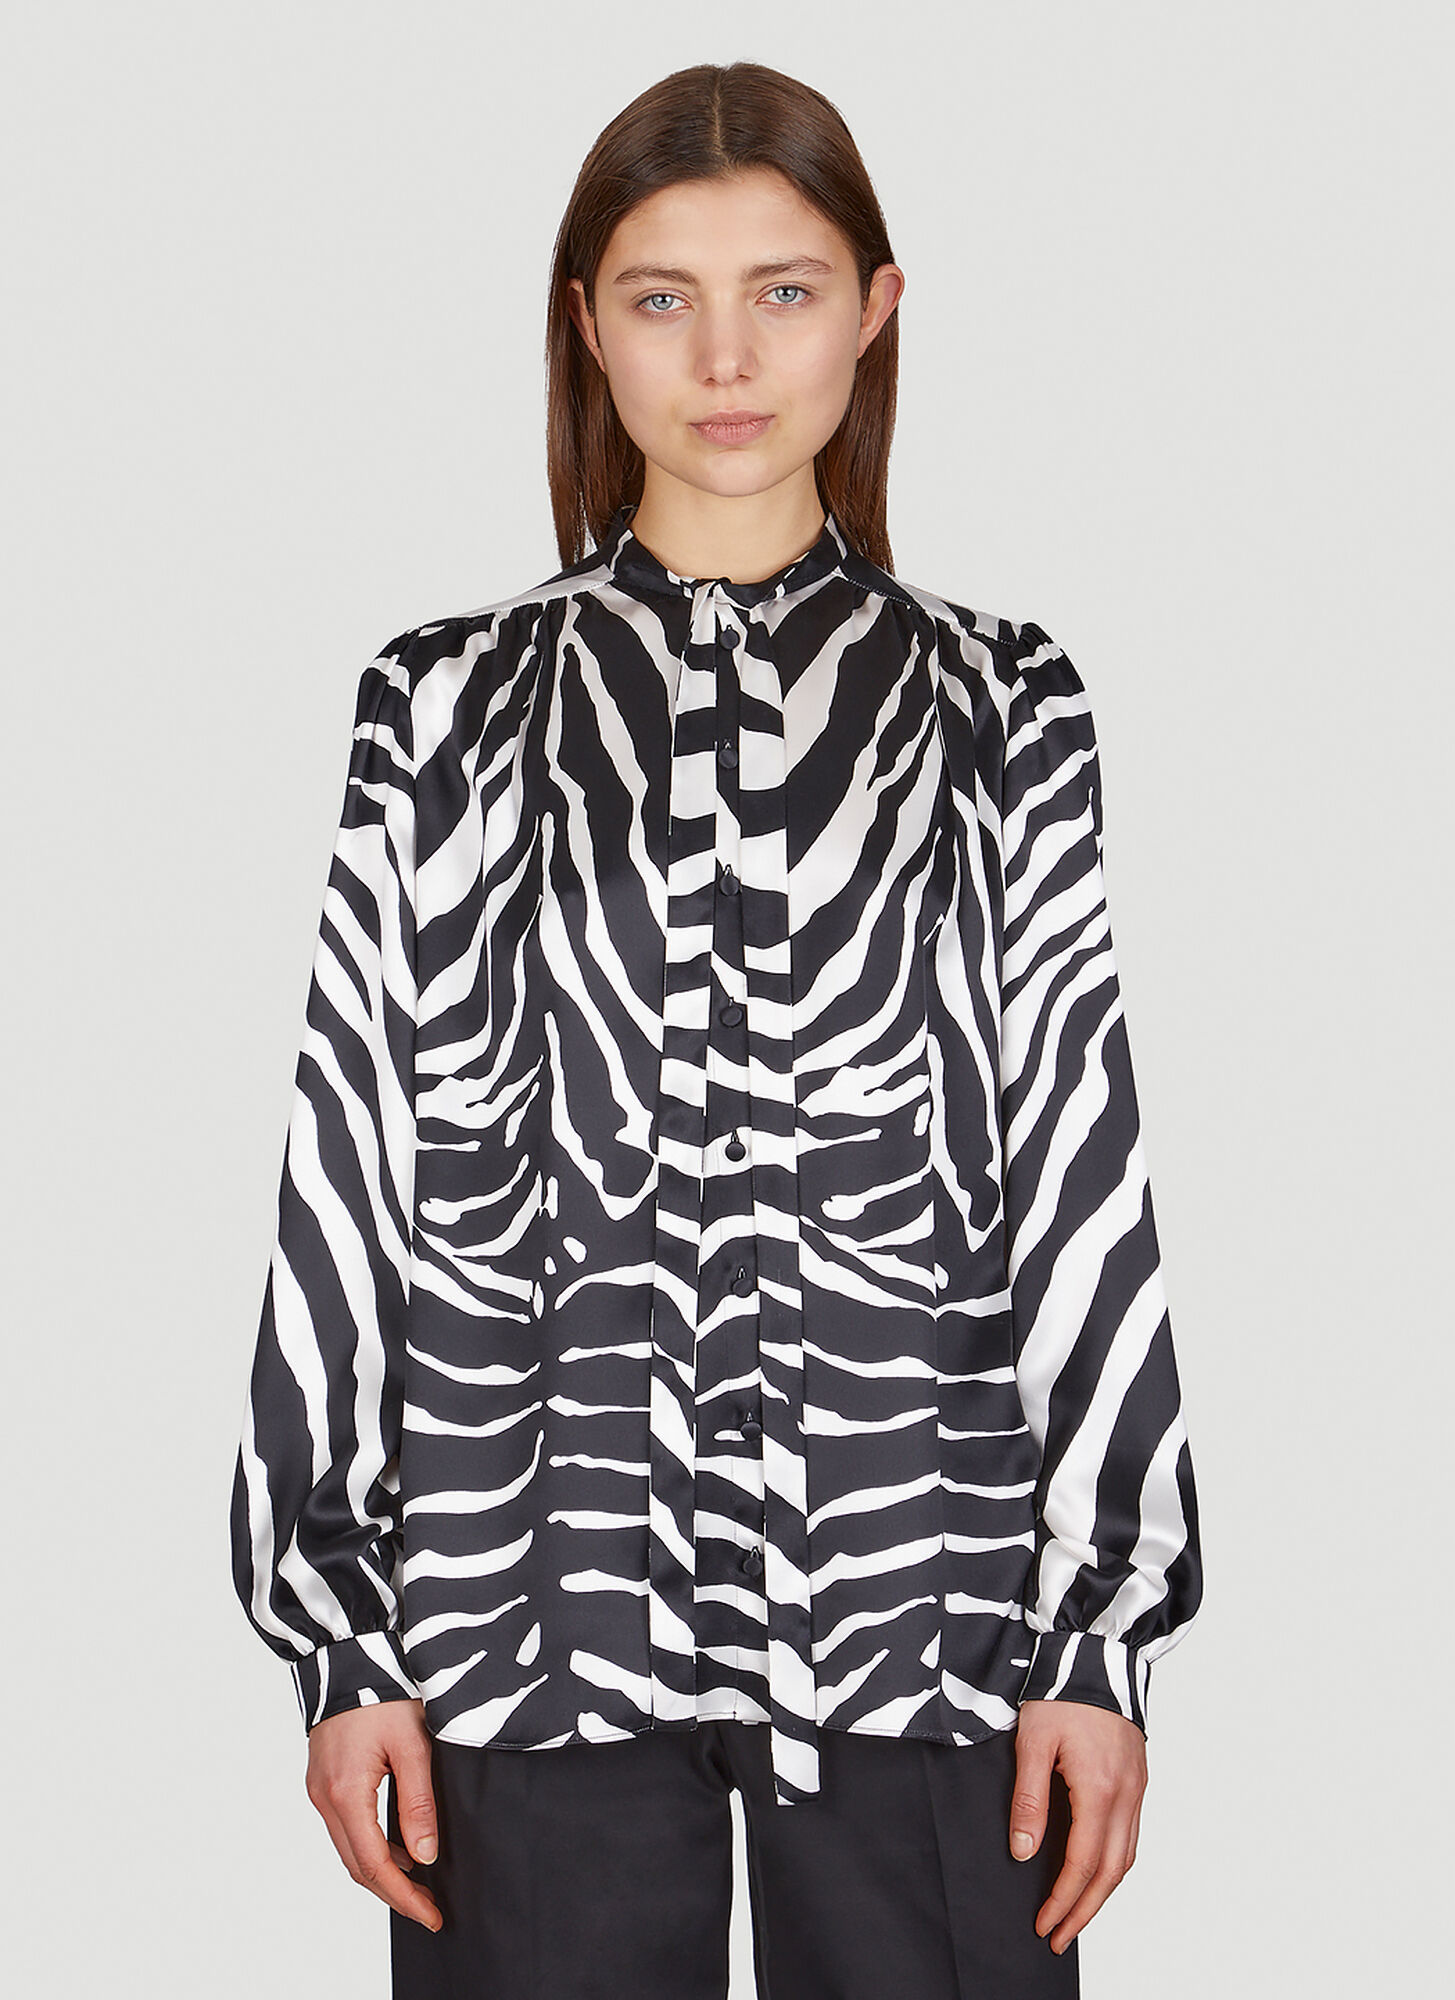 Dolce & Gabbana Zebra Print Shirt